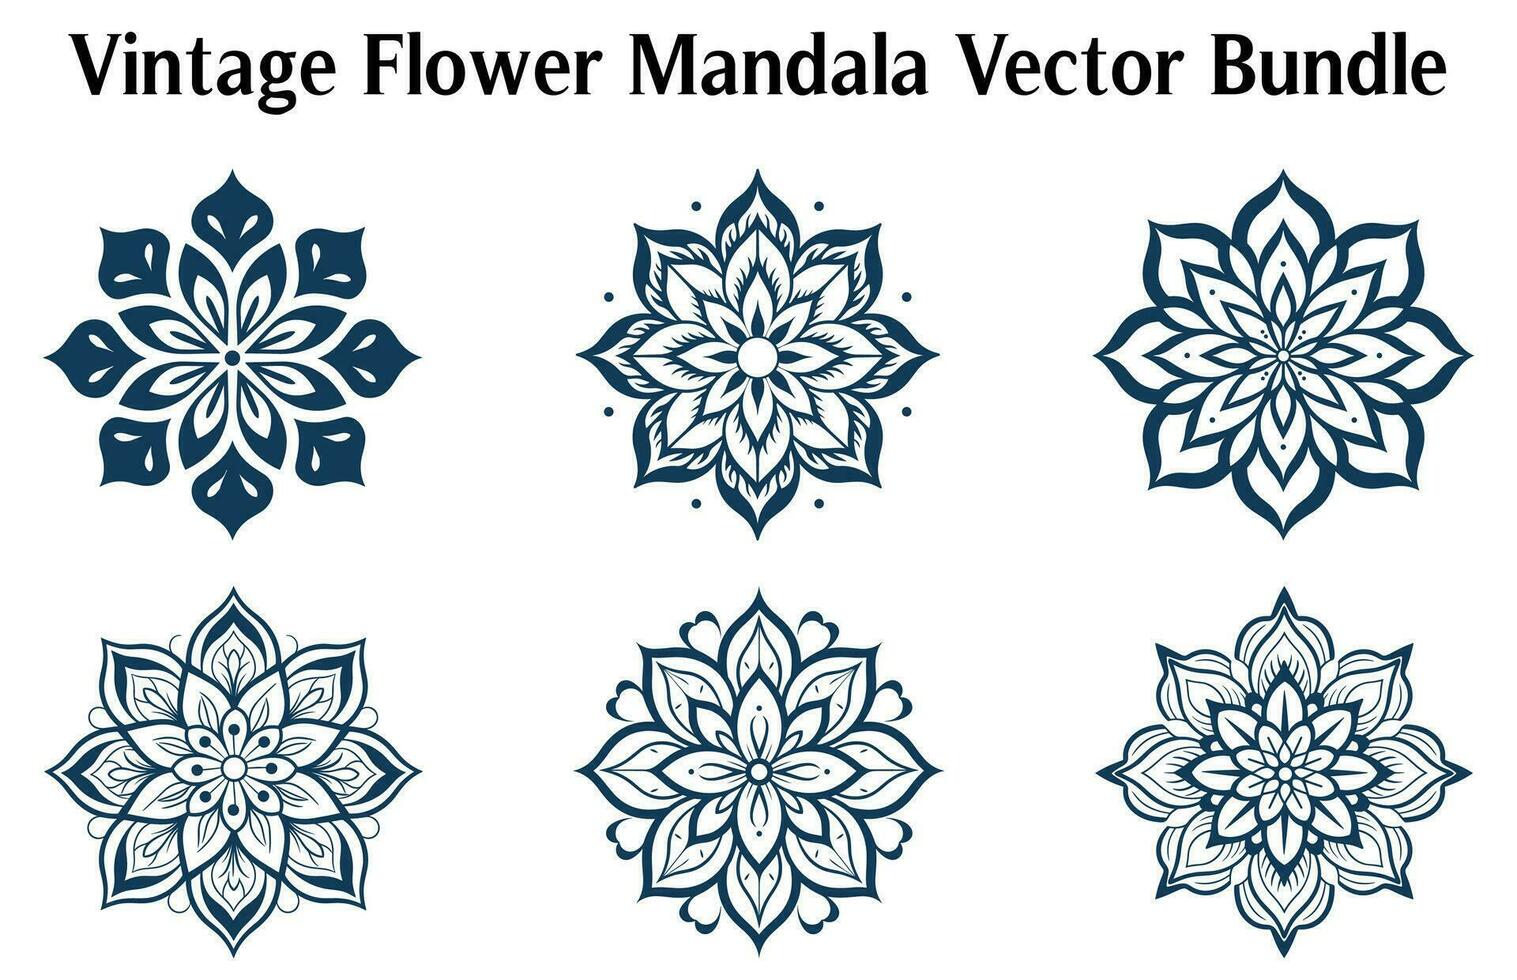 zwart en wit abstract circulaire patroon mandala, mandala lijn tekening ontwerp, sier- mandala met bloemen patronen, sier- luxe mandala patroon, reeks van vector boho mandala illustratie